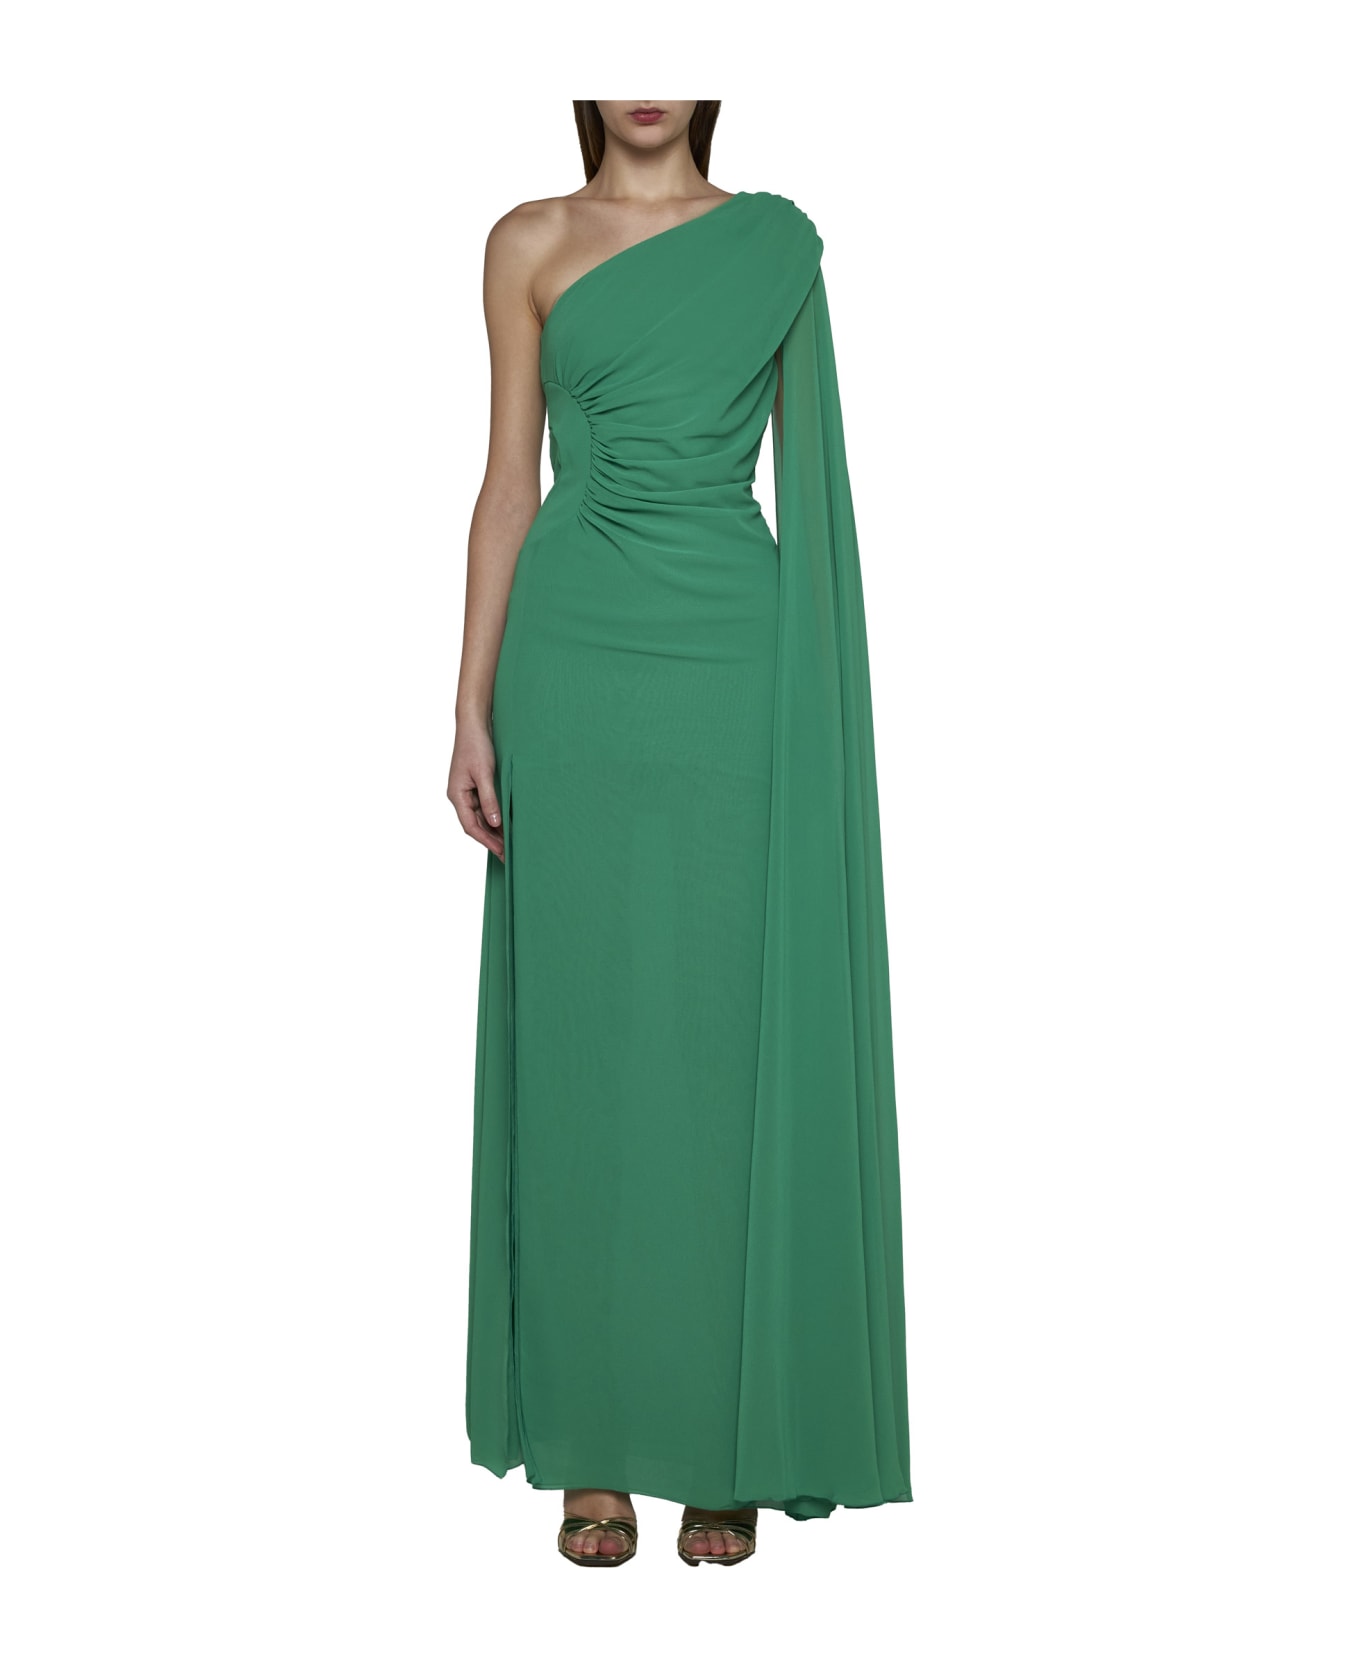 Blanca Vita Dress - Smeraldo